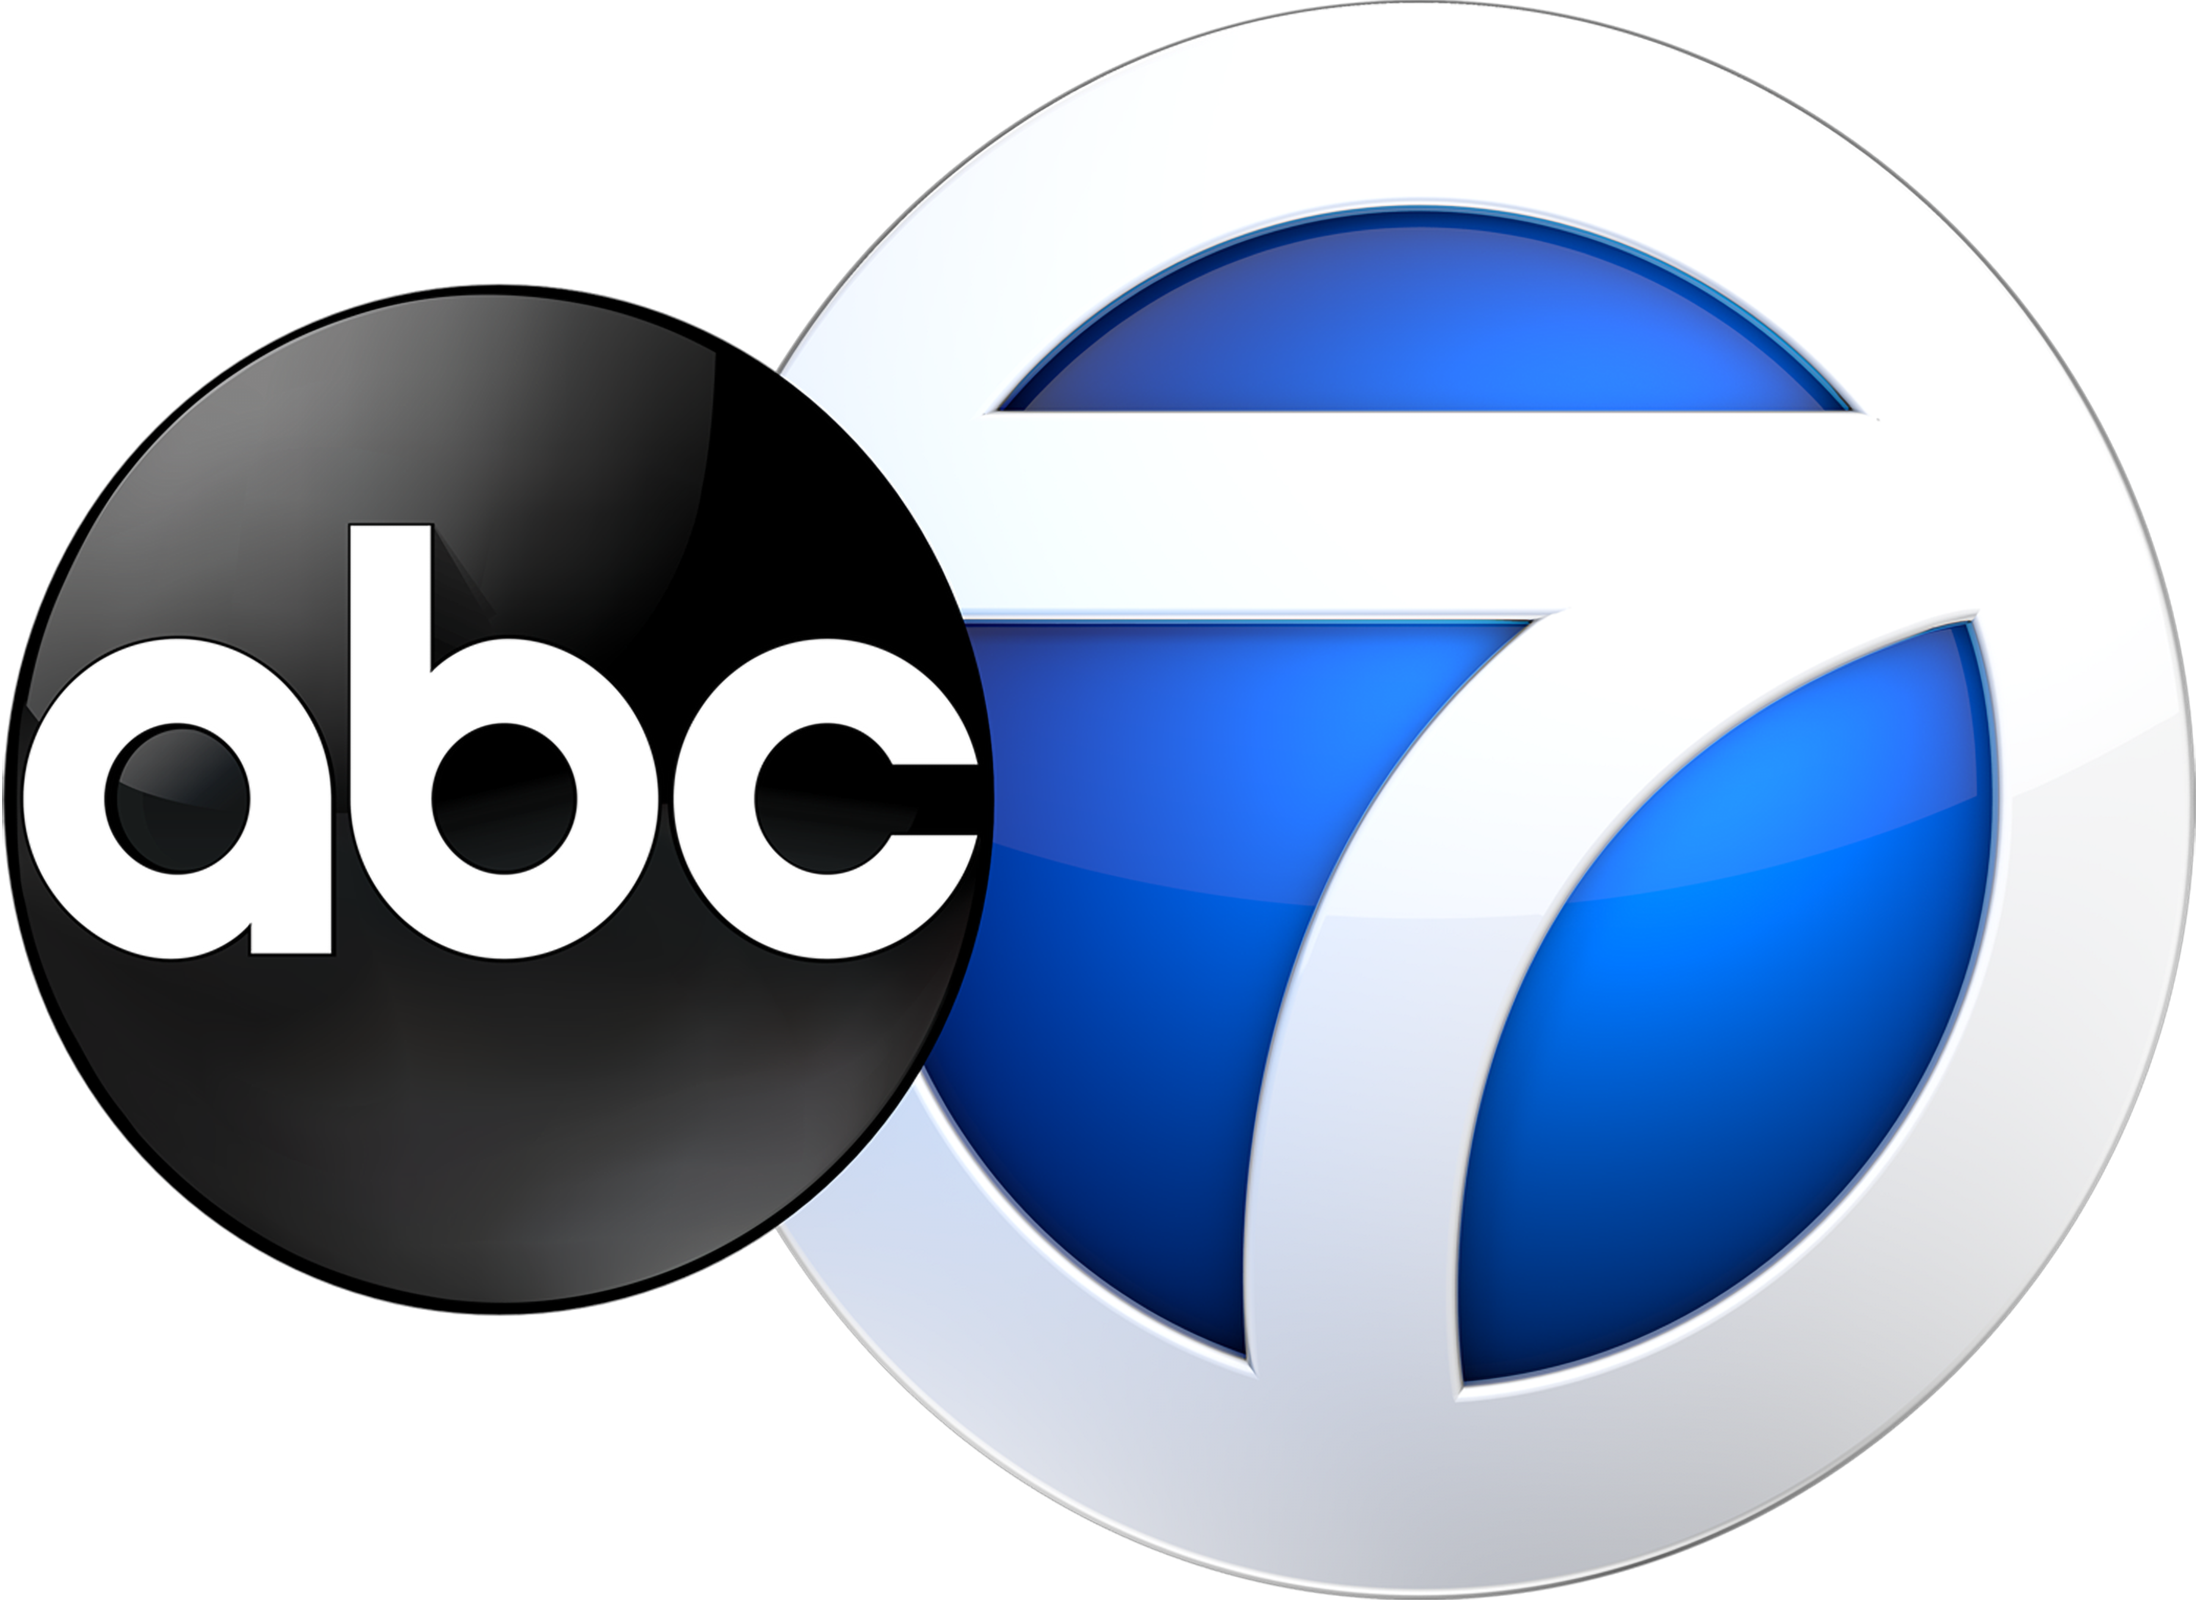 ABC 7 Chicago logo